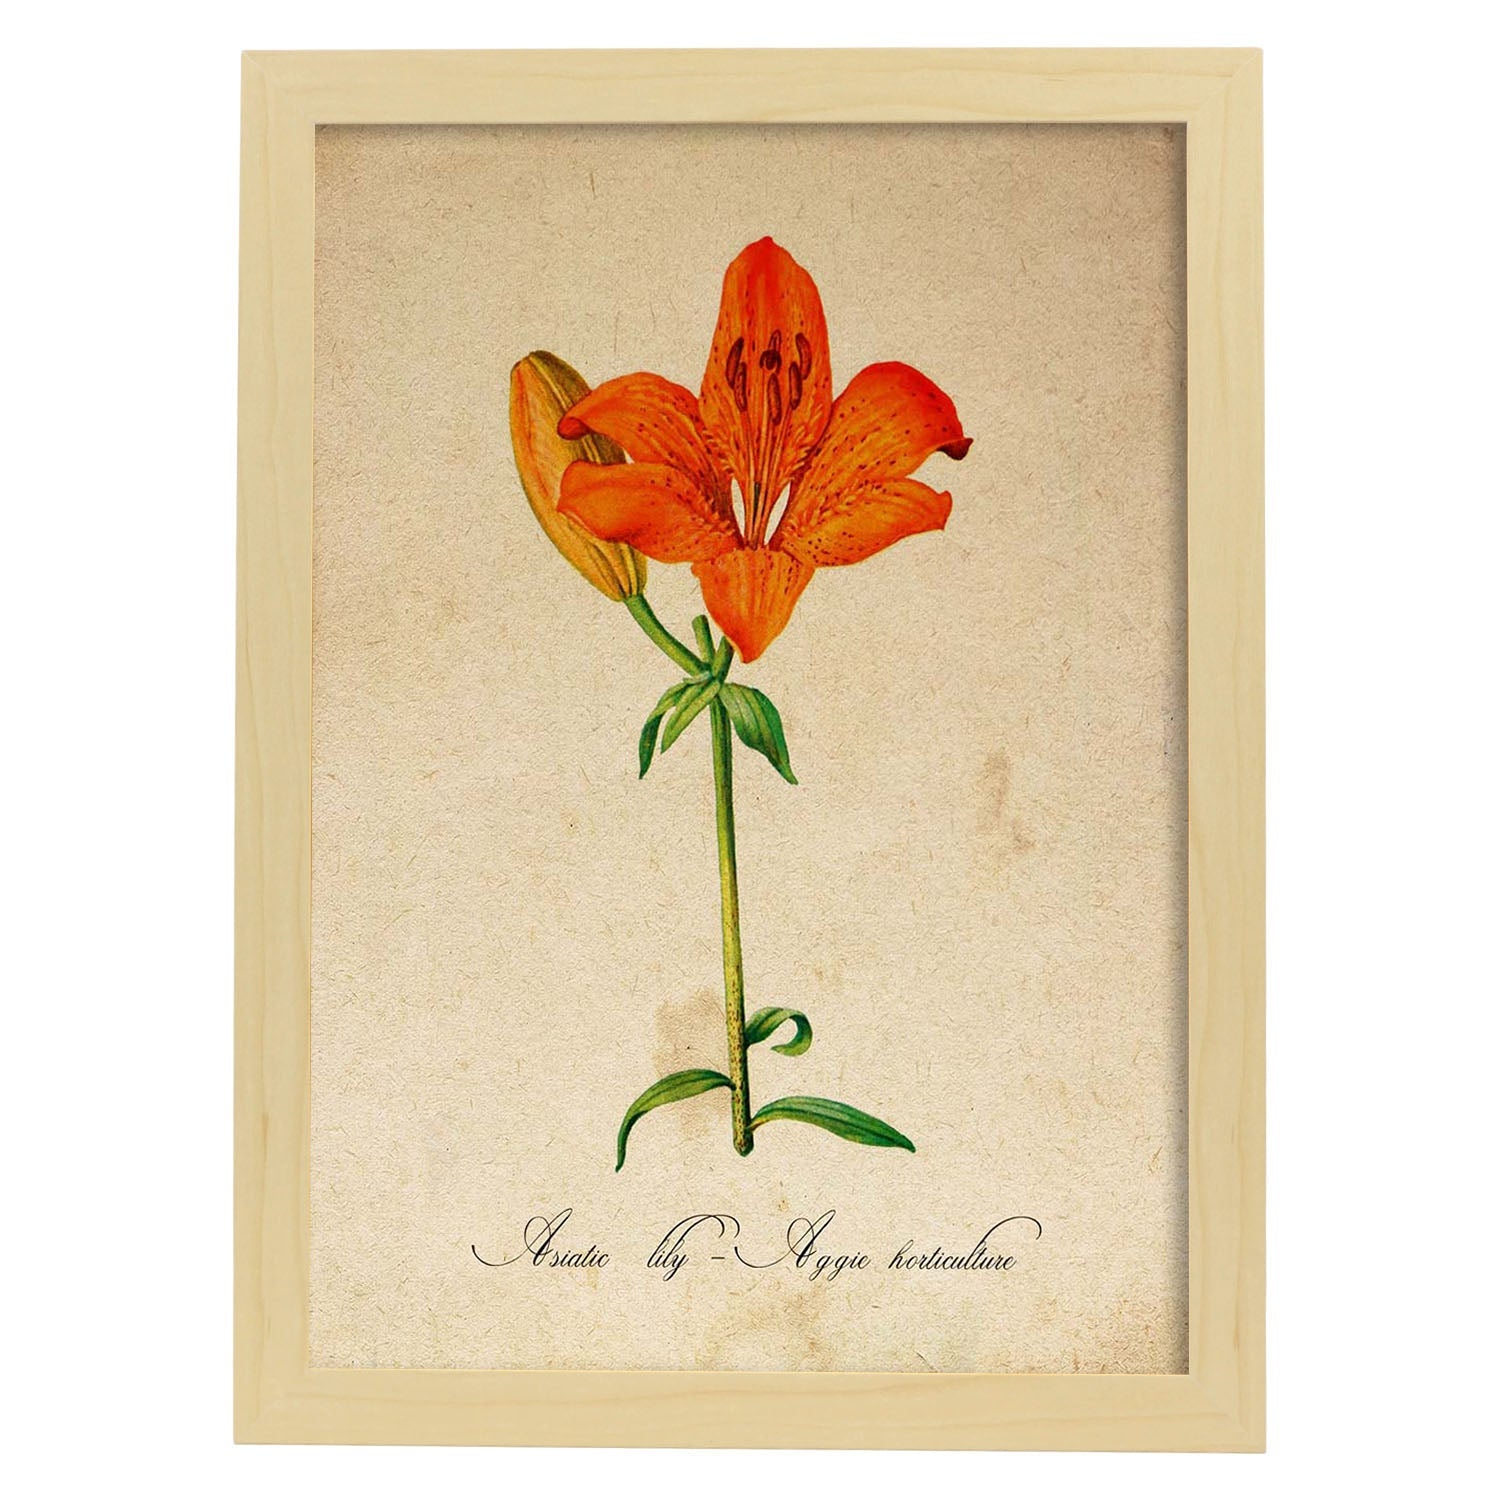 Poster de flores vintage. Lámina Asiatic Lily - Aggie Horticulture con diseño vintage.-Artwork-Nacnic-A4-Marco Madera clara-Nacnic Estudio SL